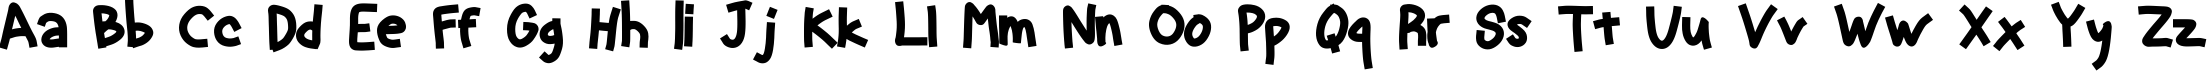 Пример написания английского алфавита шрифтом Animated